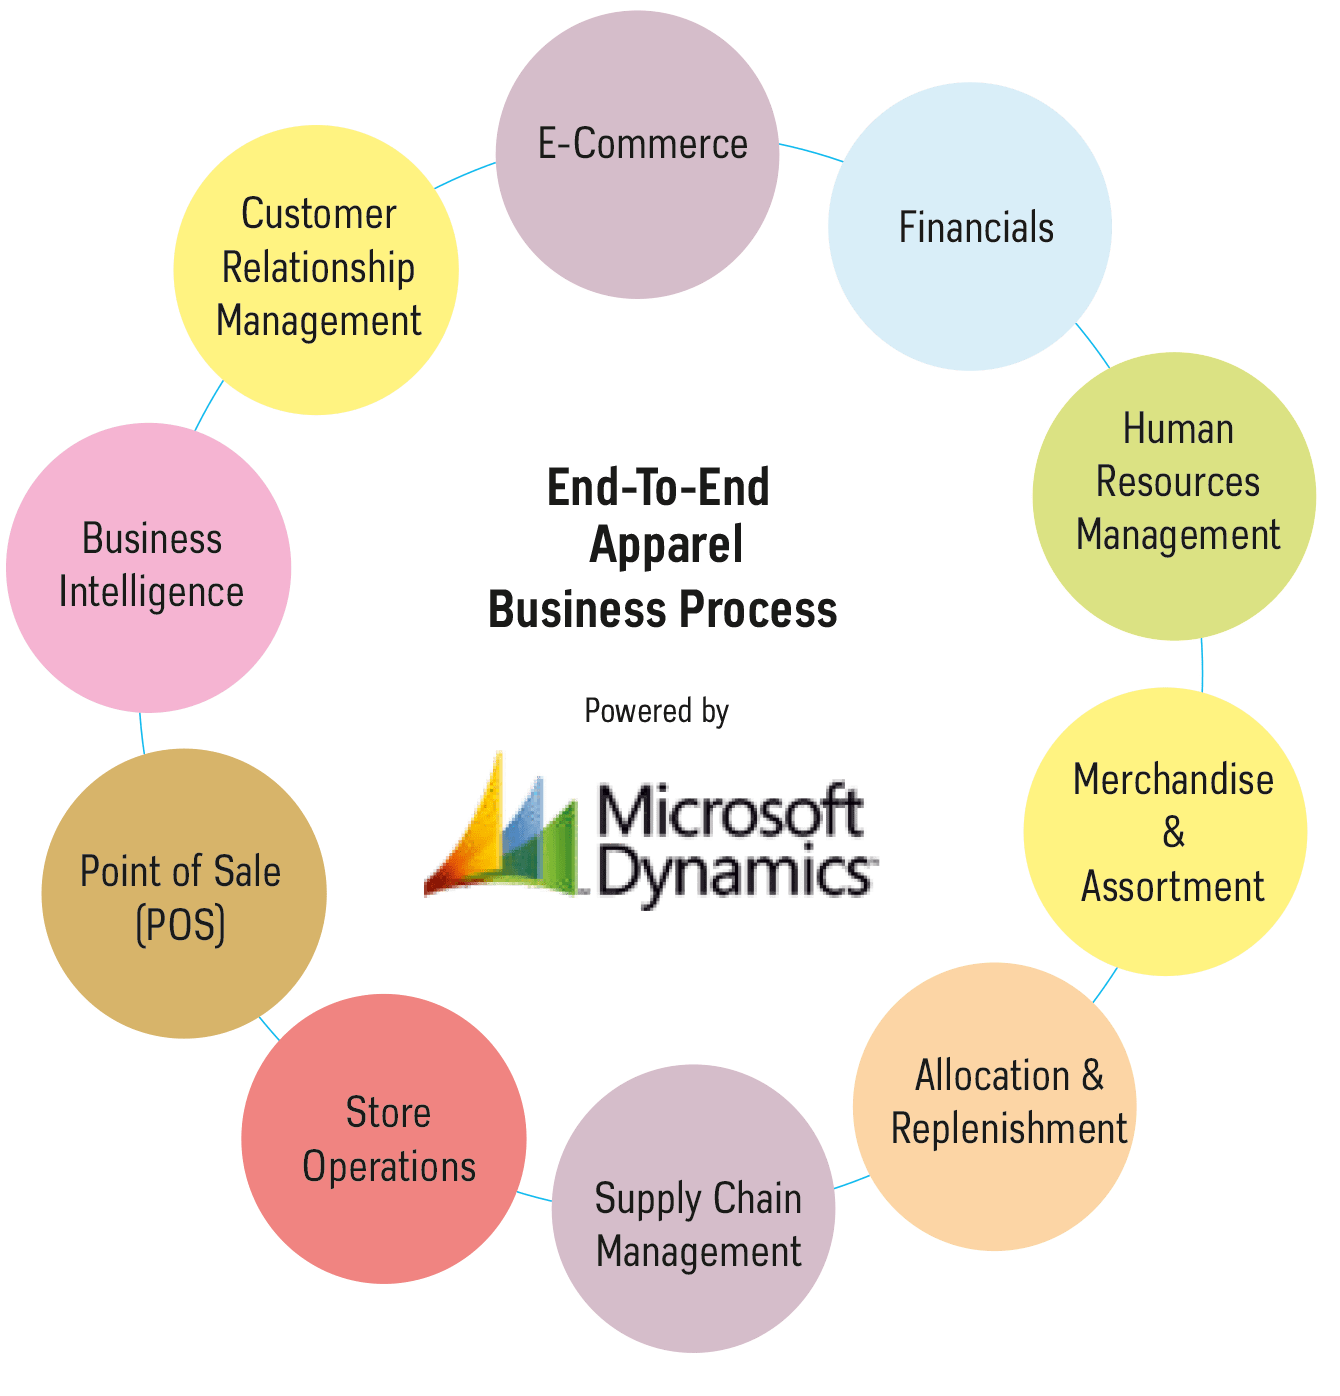 Apparel Business Process